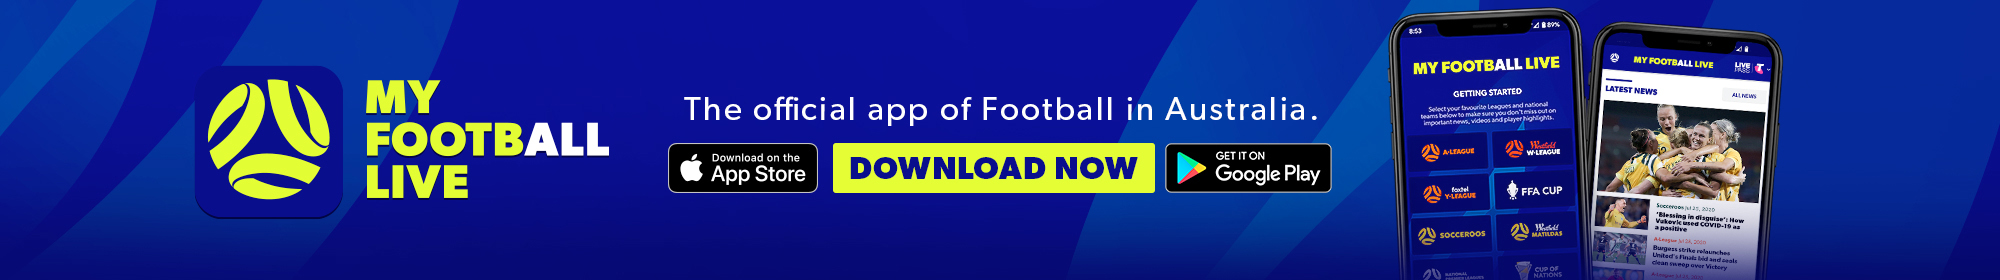 My Football Live app thin banner 2021